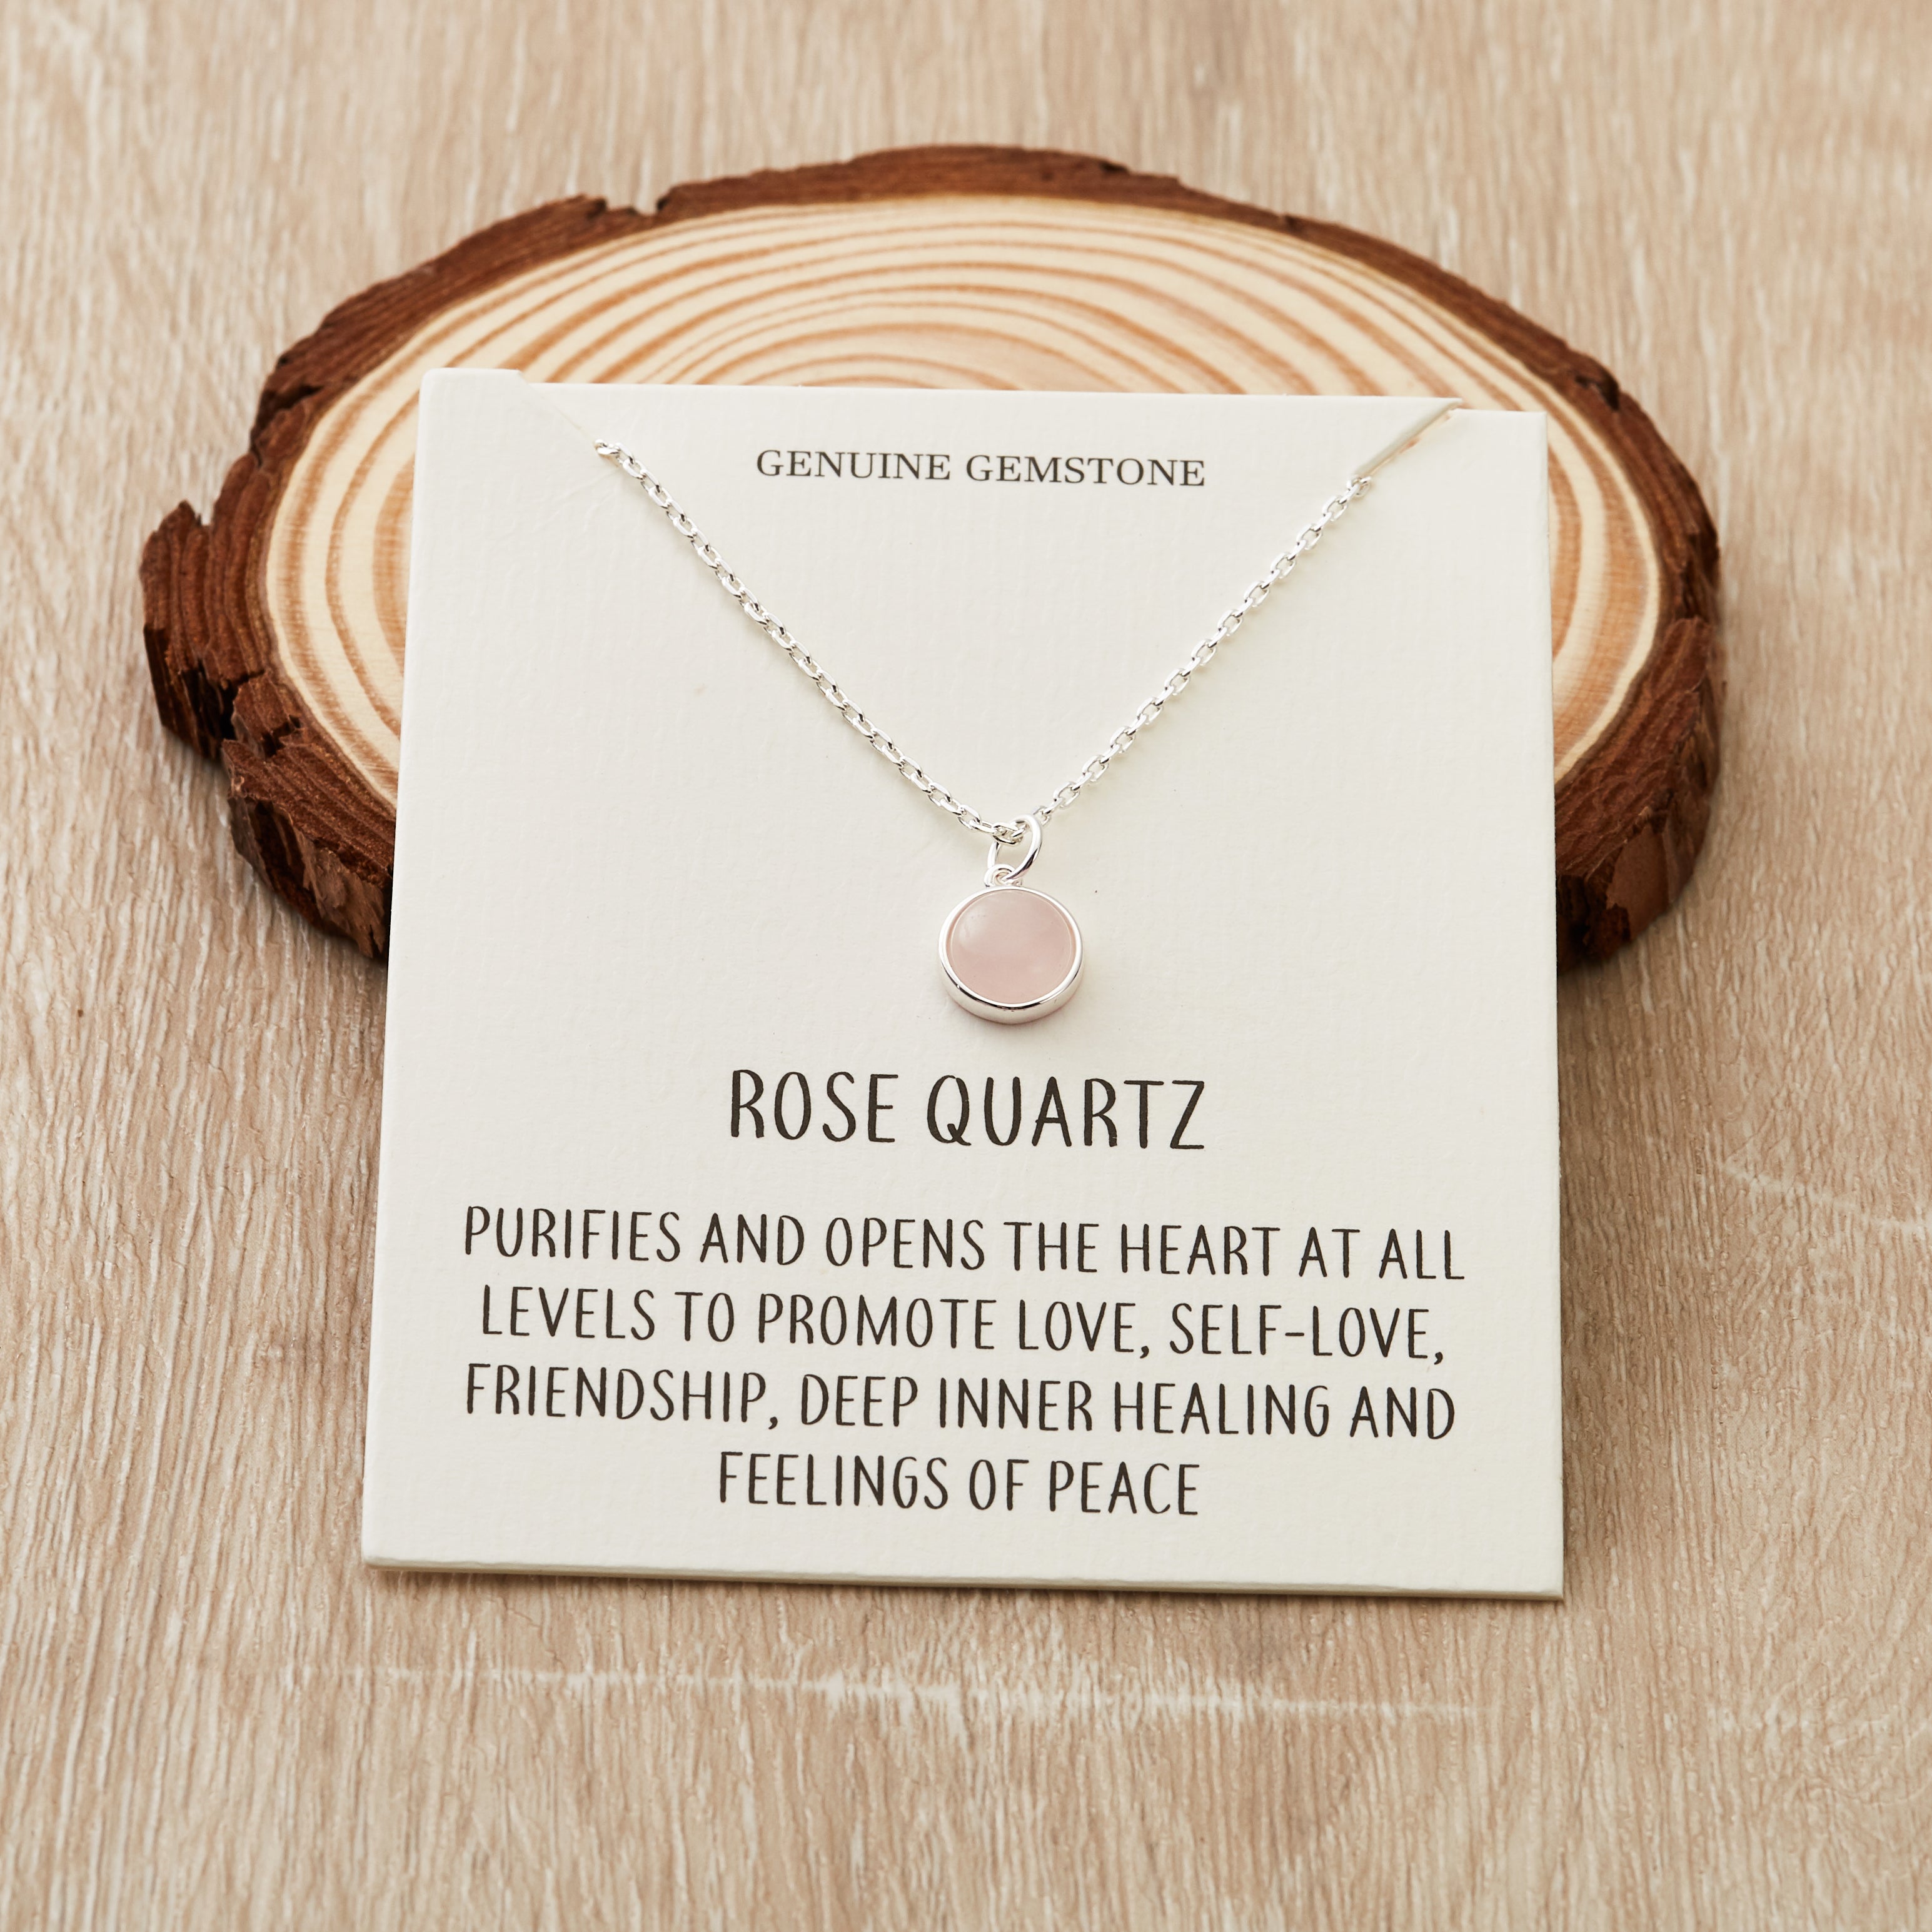 Rose Quartz Necklace with Quote Card